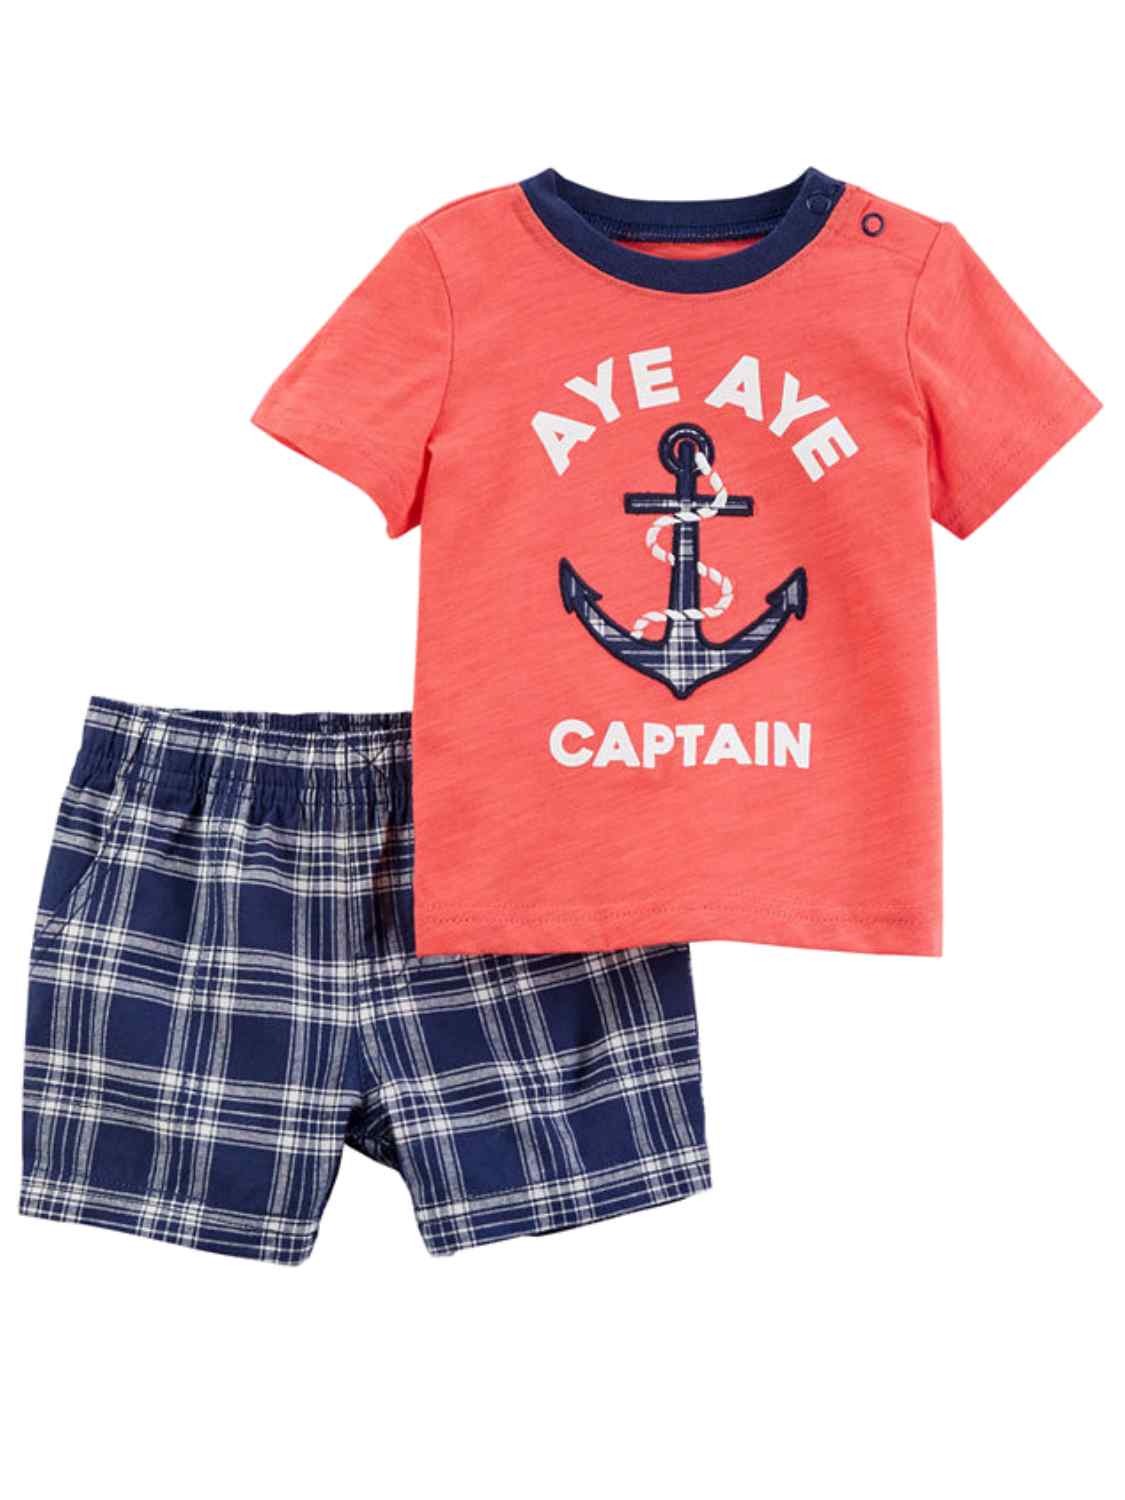 Carter's Carters Infant & Toddler Boys Aye Aye Captain Anchor Baby Outfit Shirt & Shorts